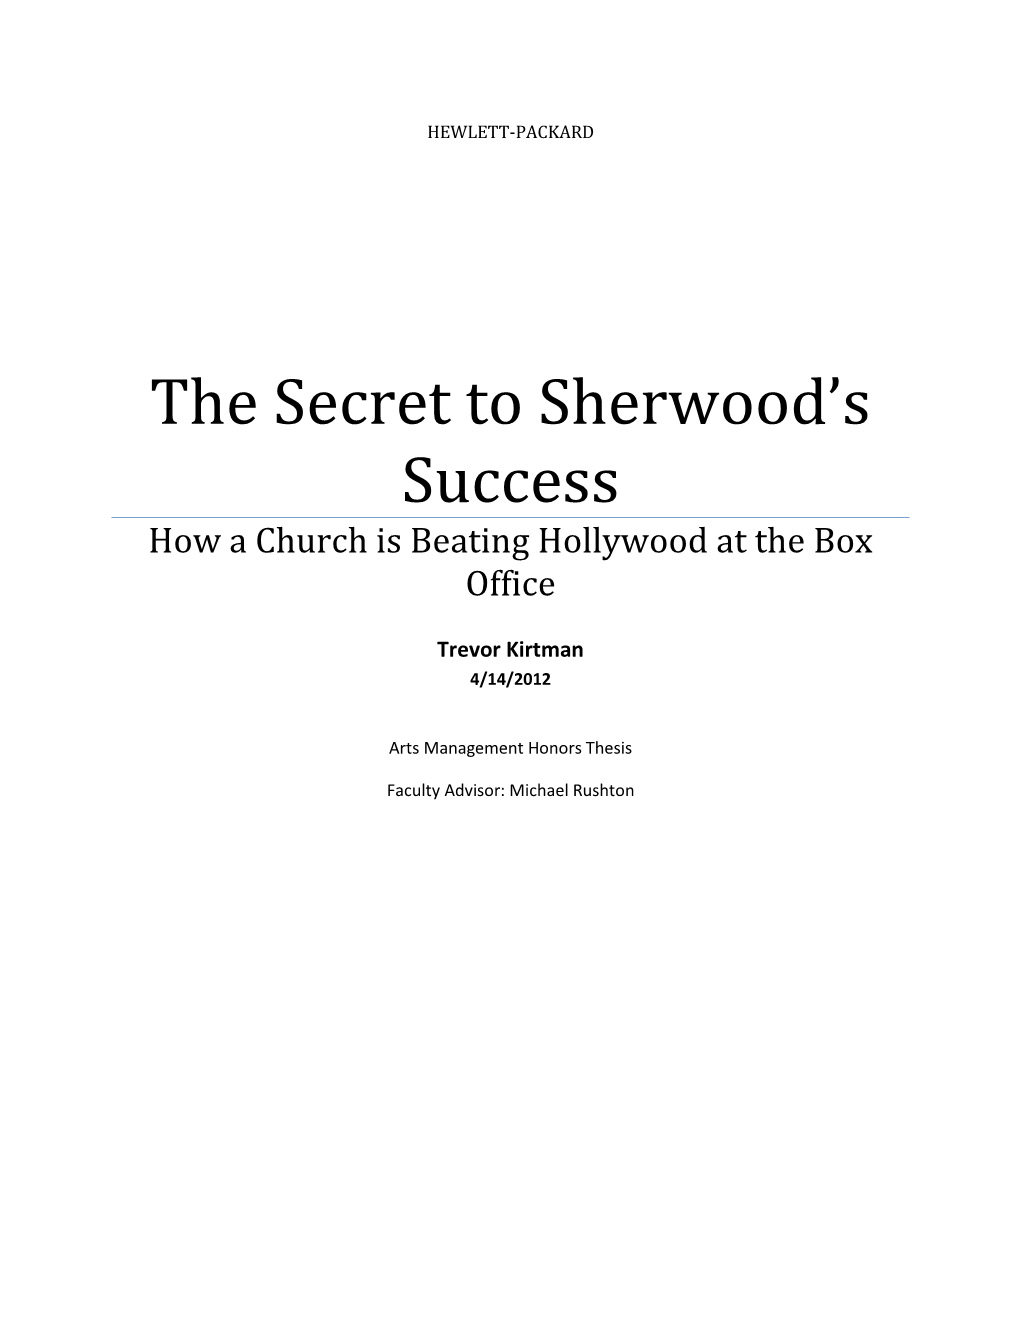 The Secret to Sherwood's Success